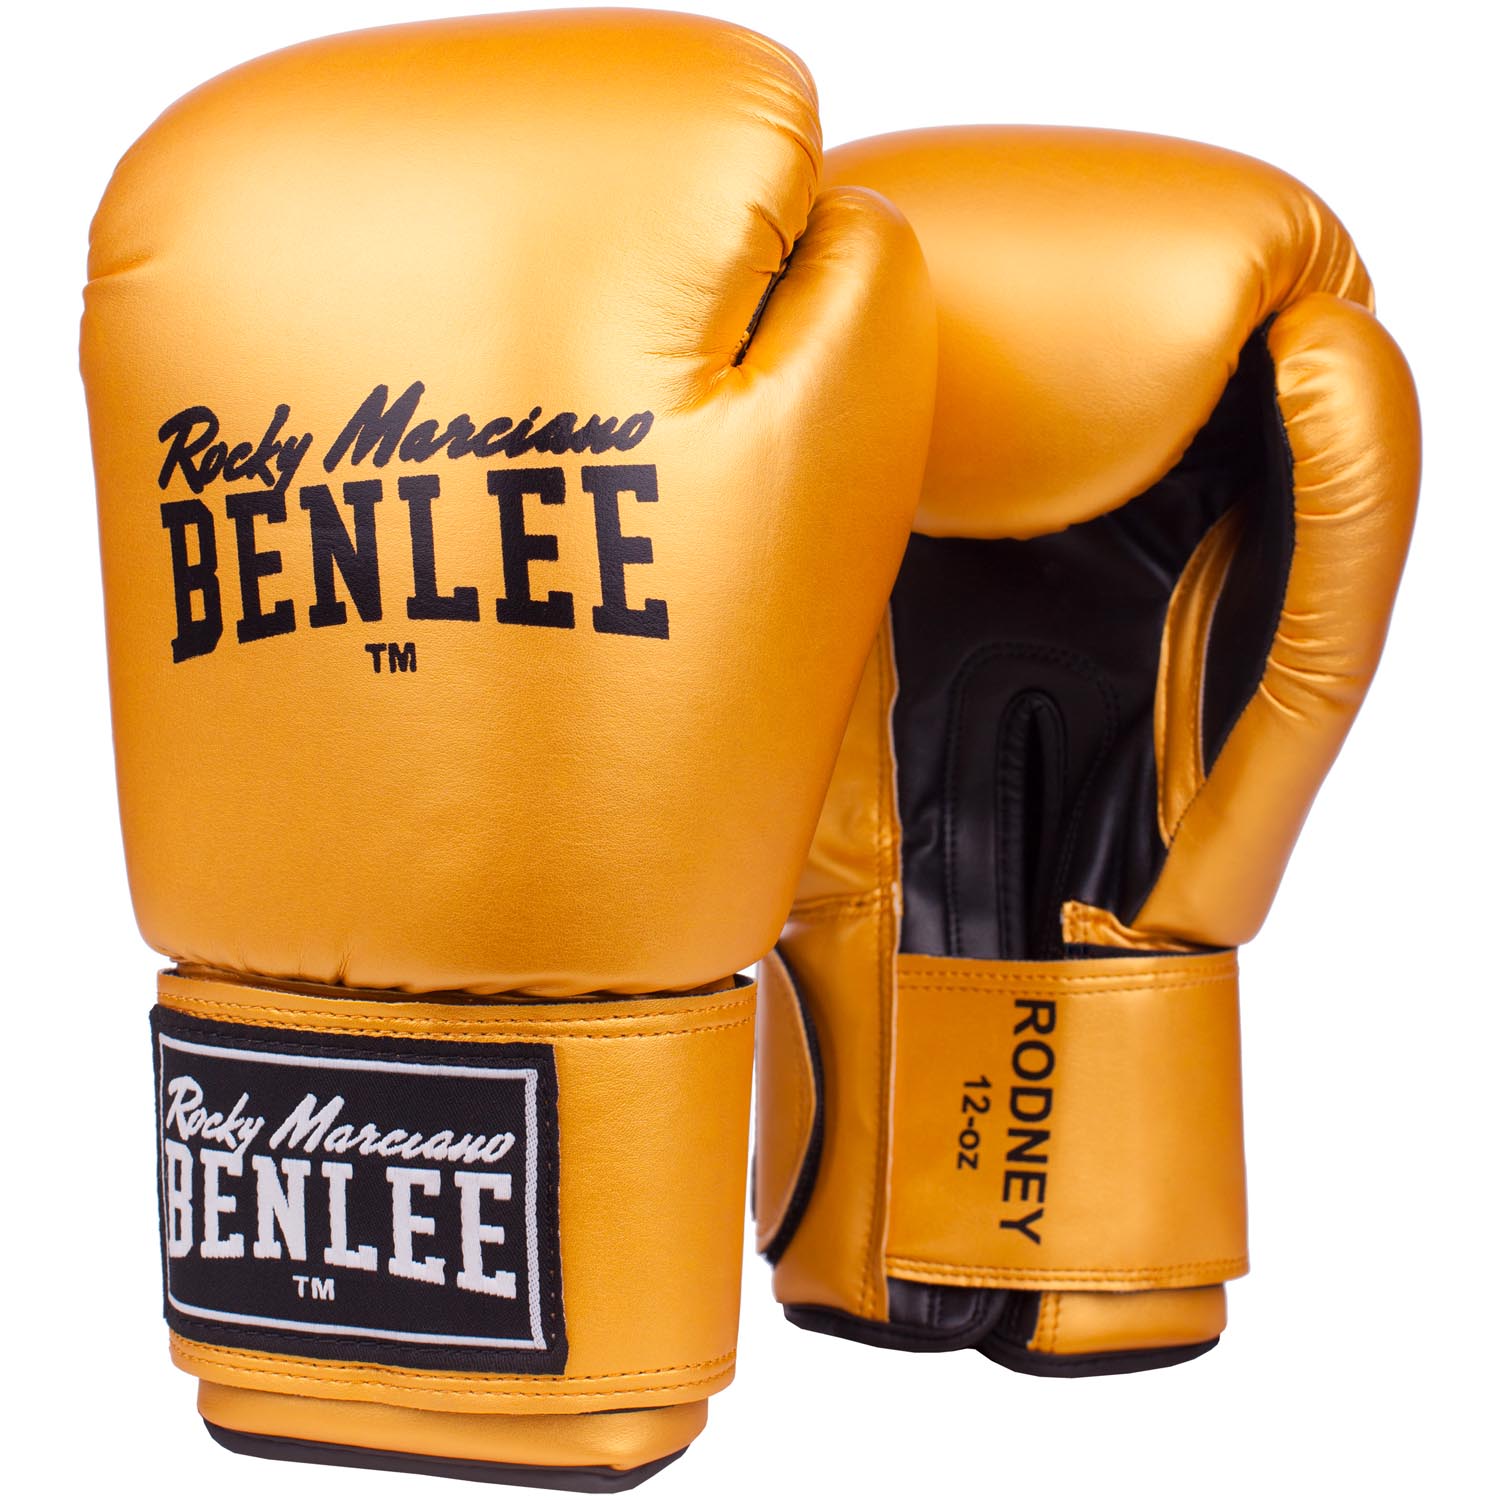 BENLEE Boxhandschuhe, Rodney, gold-schwarz 14 Oz